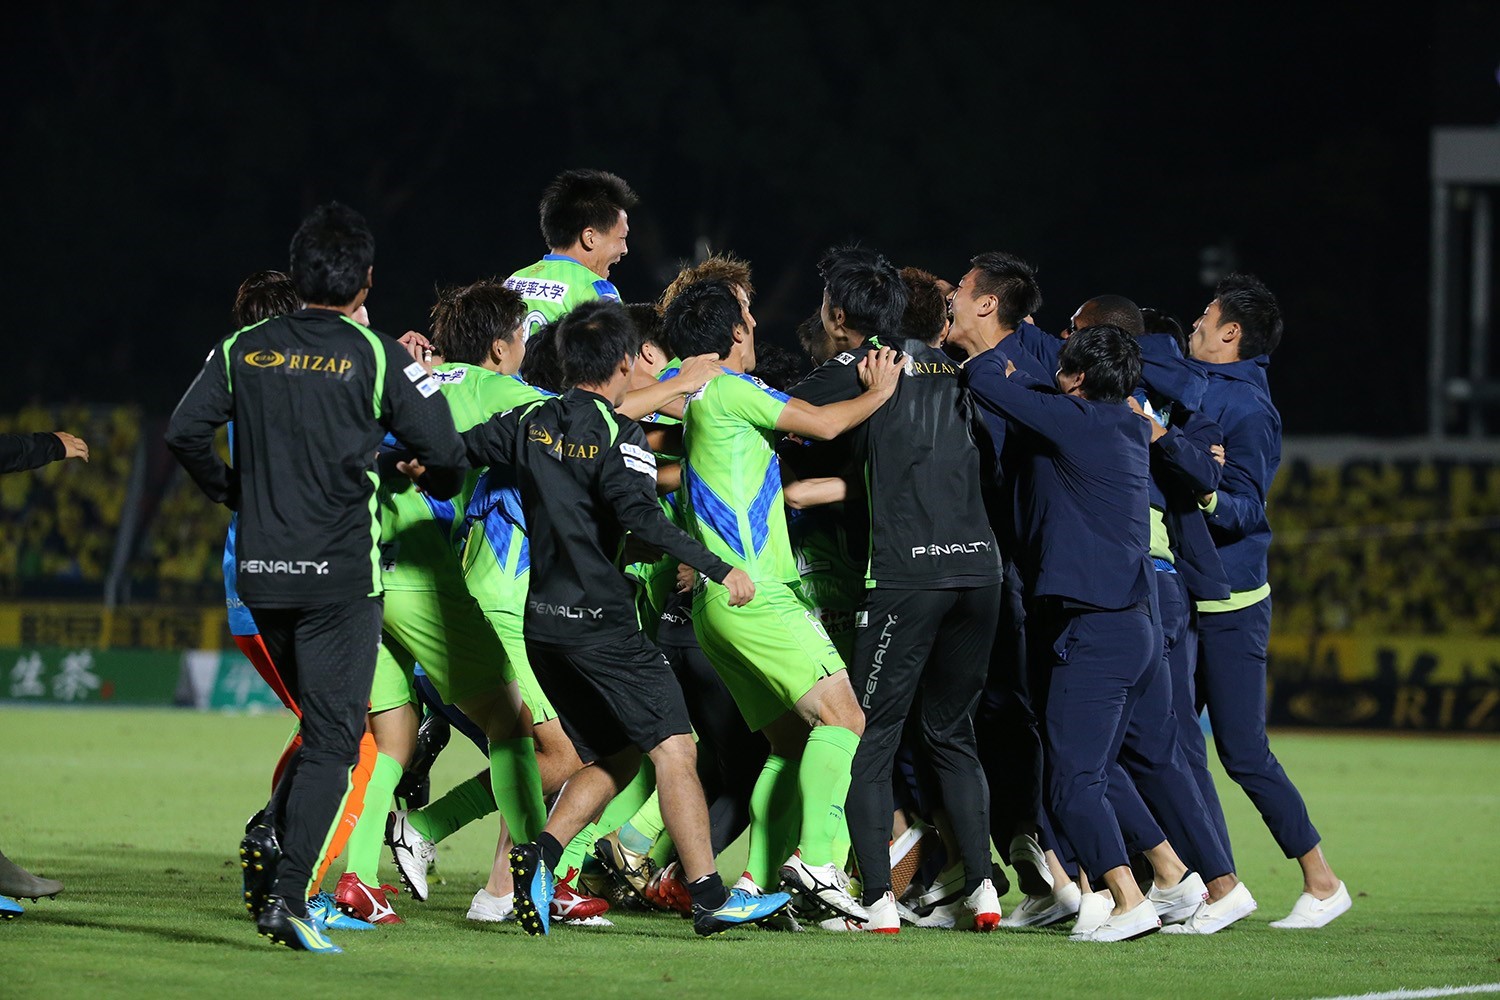 Rizapグループのj1サッカーチーム 湘南ベルマーレ クラブ史上初のルヴァンカップ決勝進出 Rizap株式会社のプレスリリース